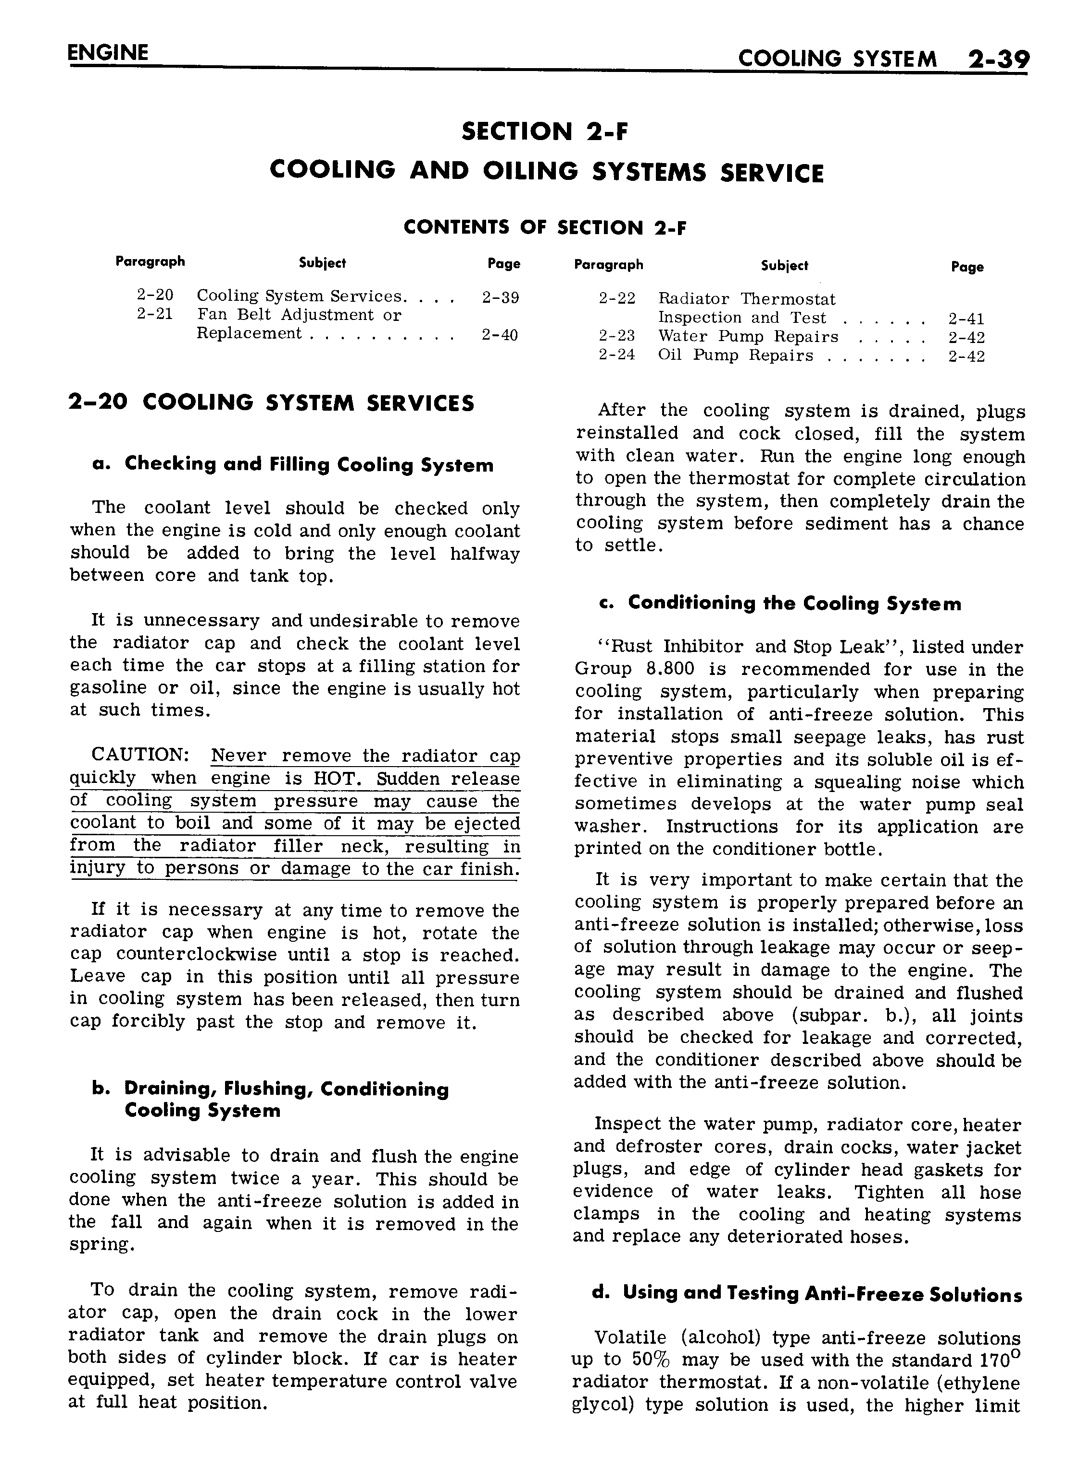 n_03 1961 Buick Shop Manual - Engine-039-039.jpg